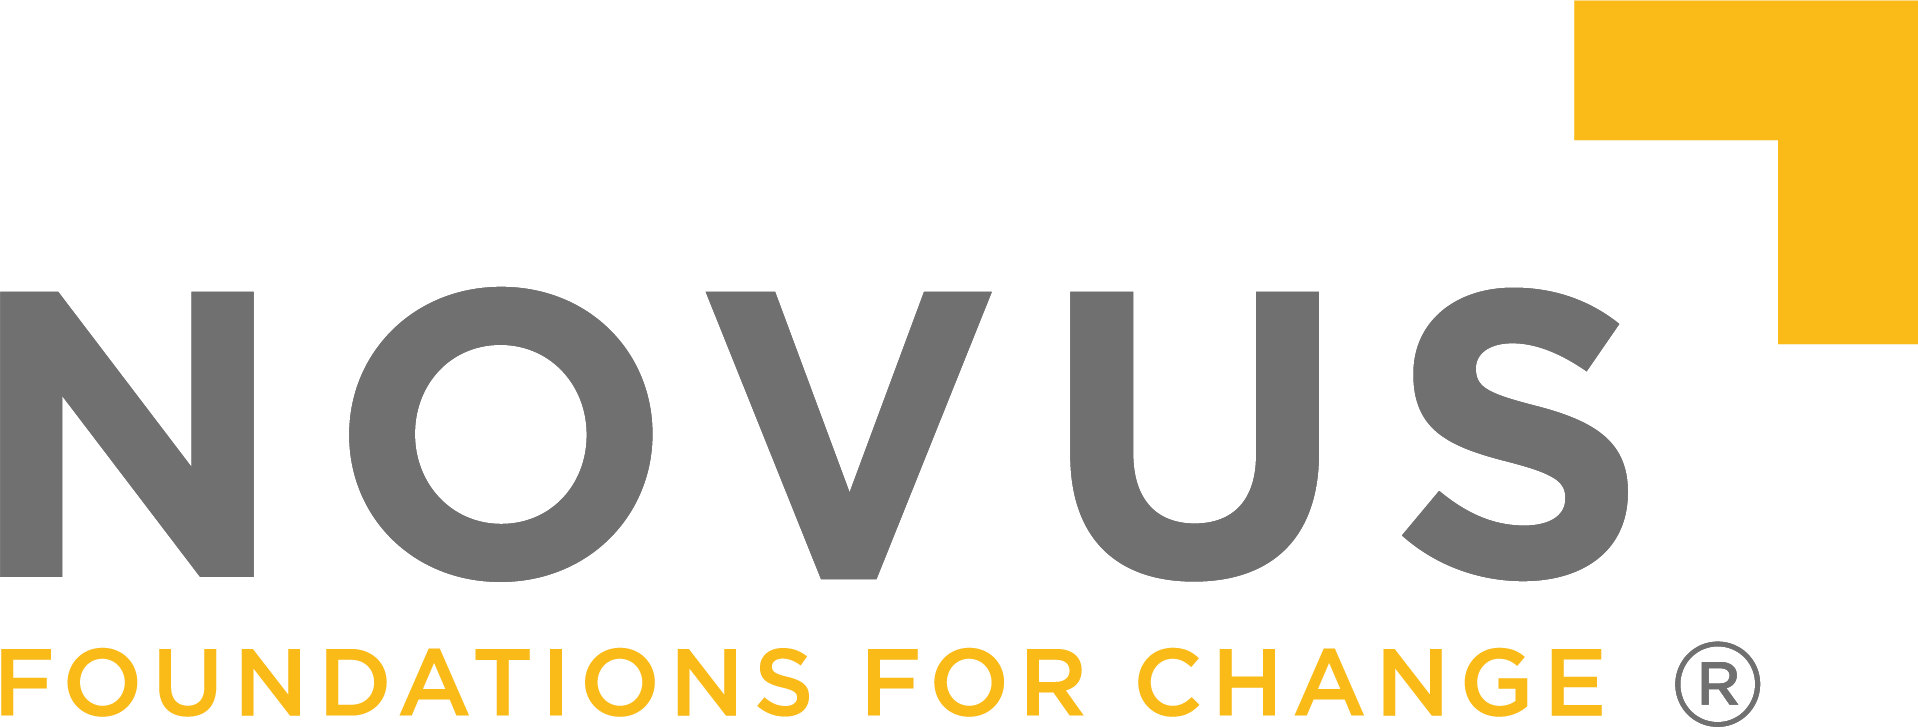 Novus logo - Foundations For Change